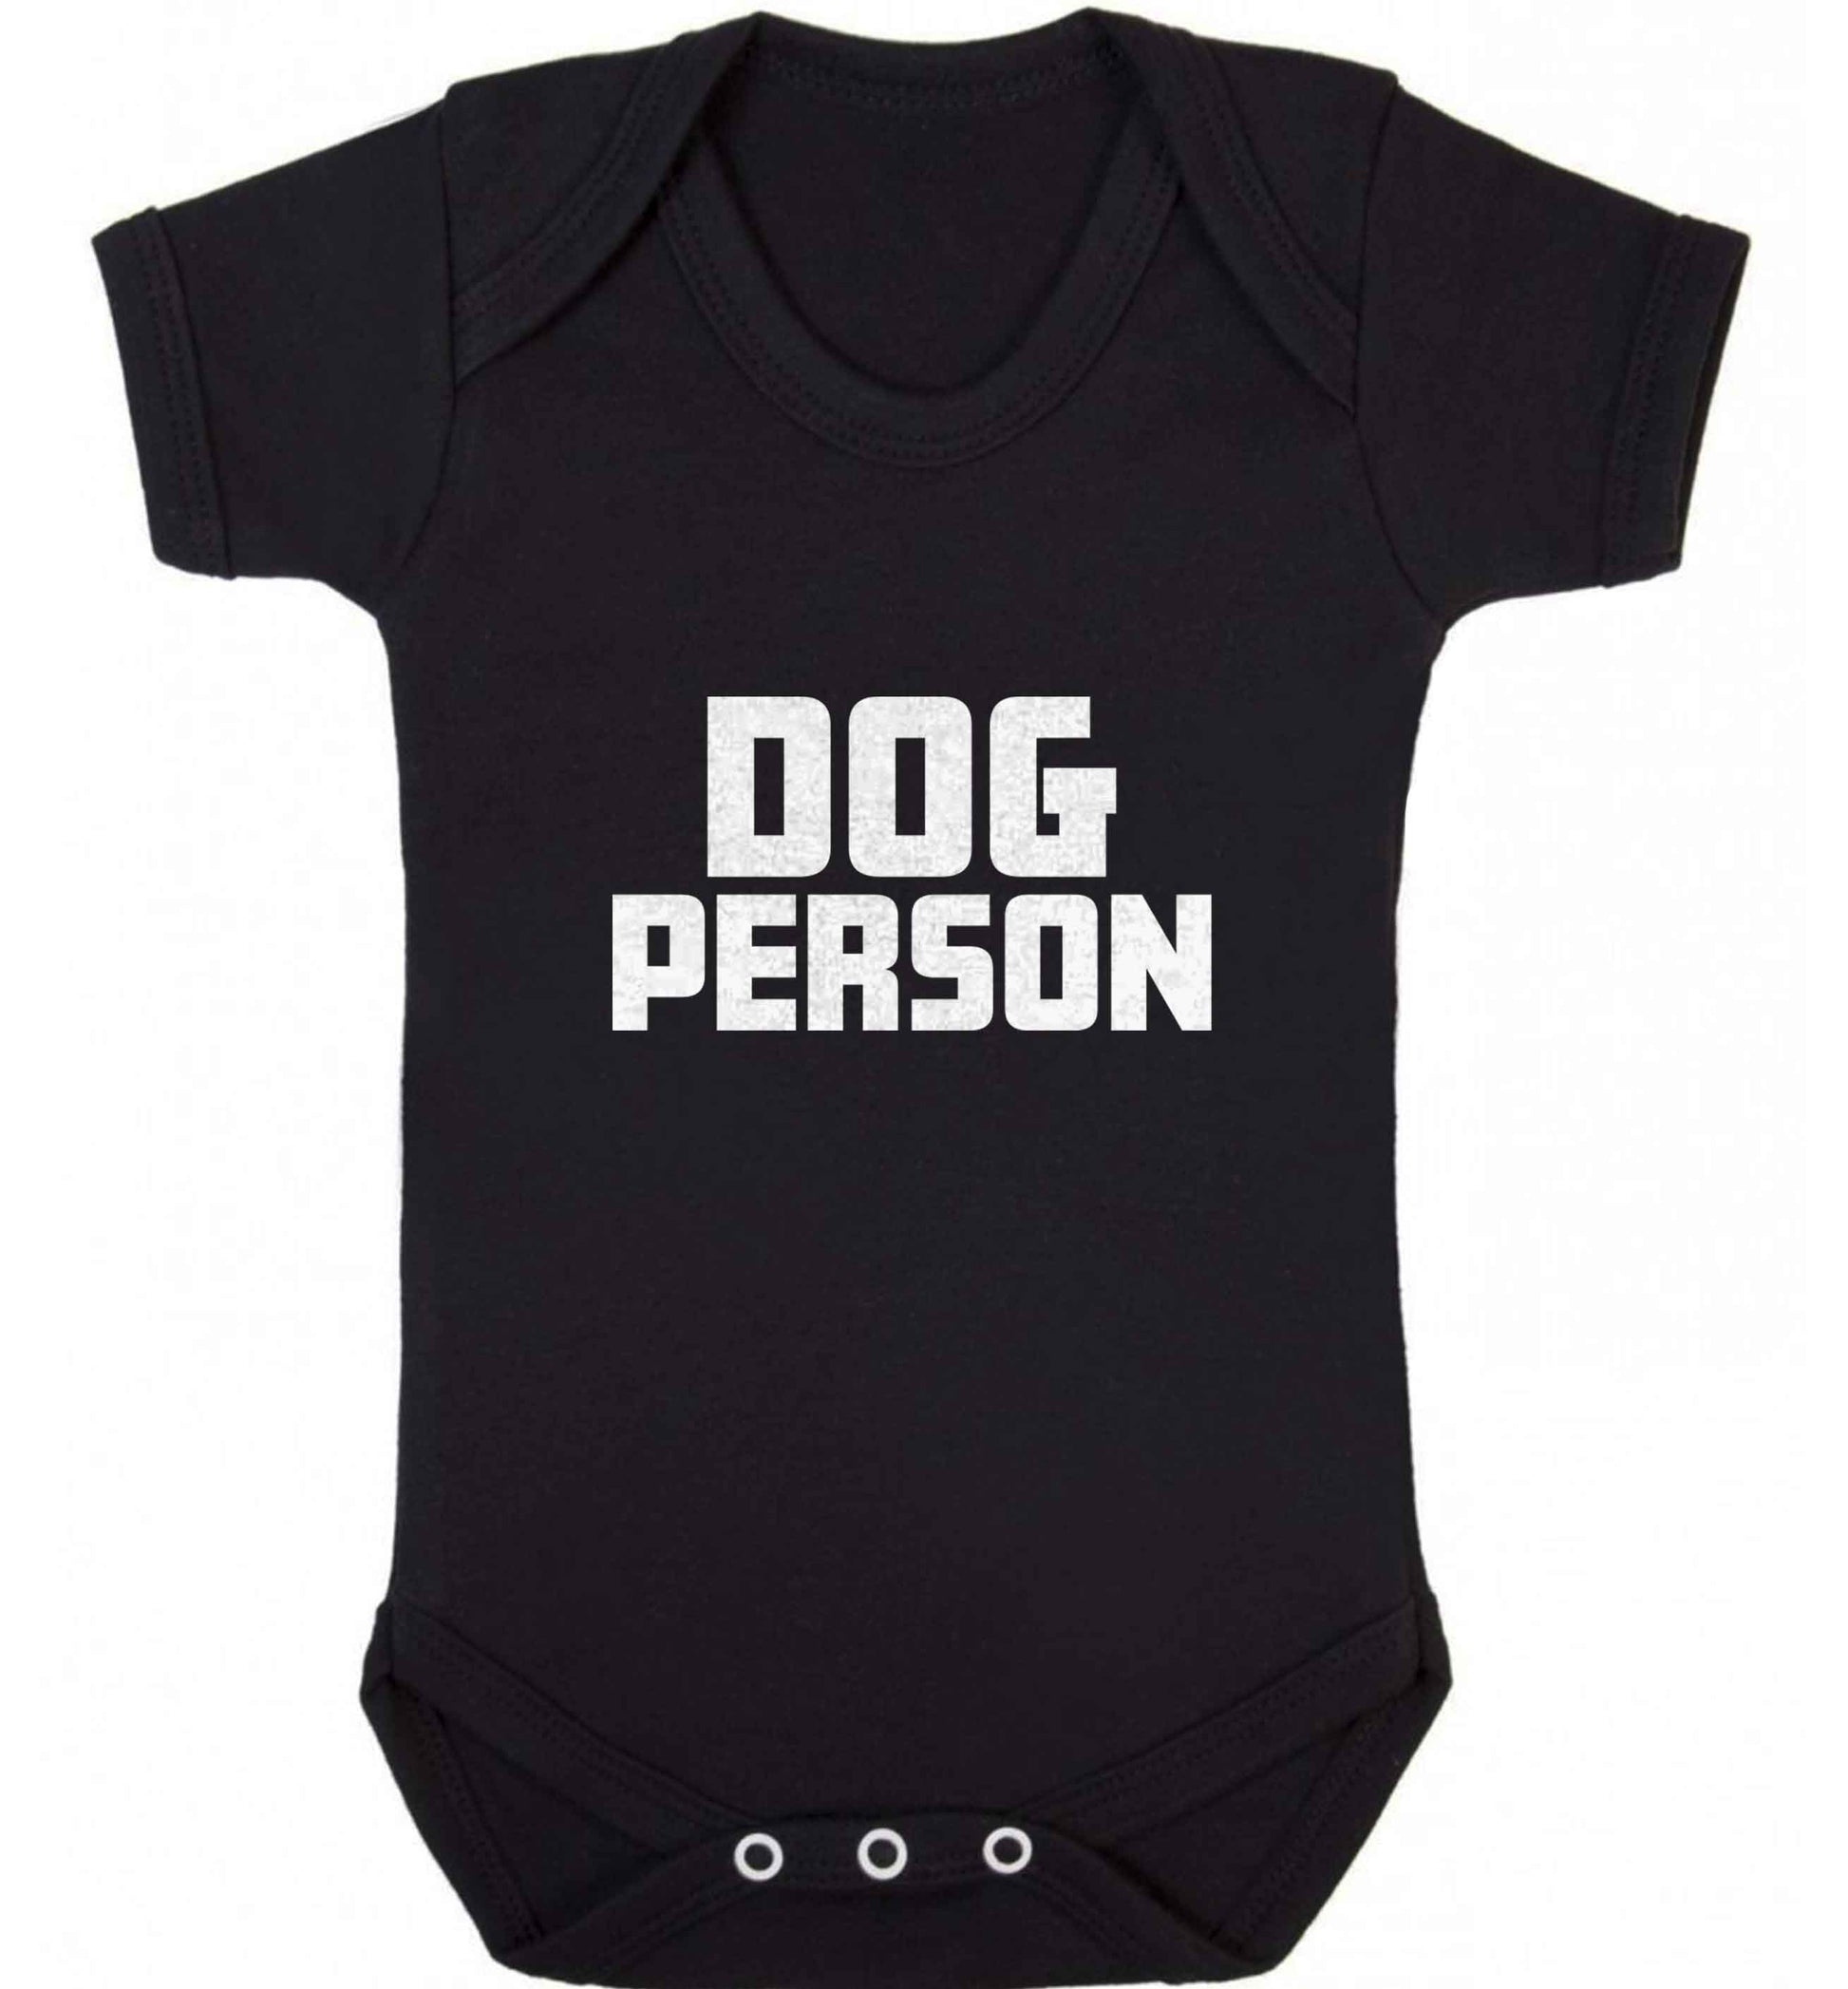 Dog Person Kit baby vest black 18-24 months